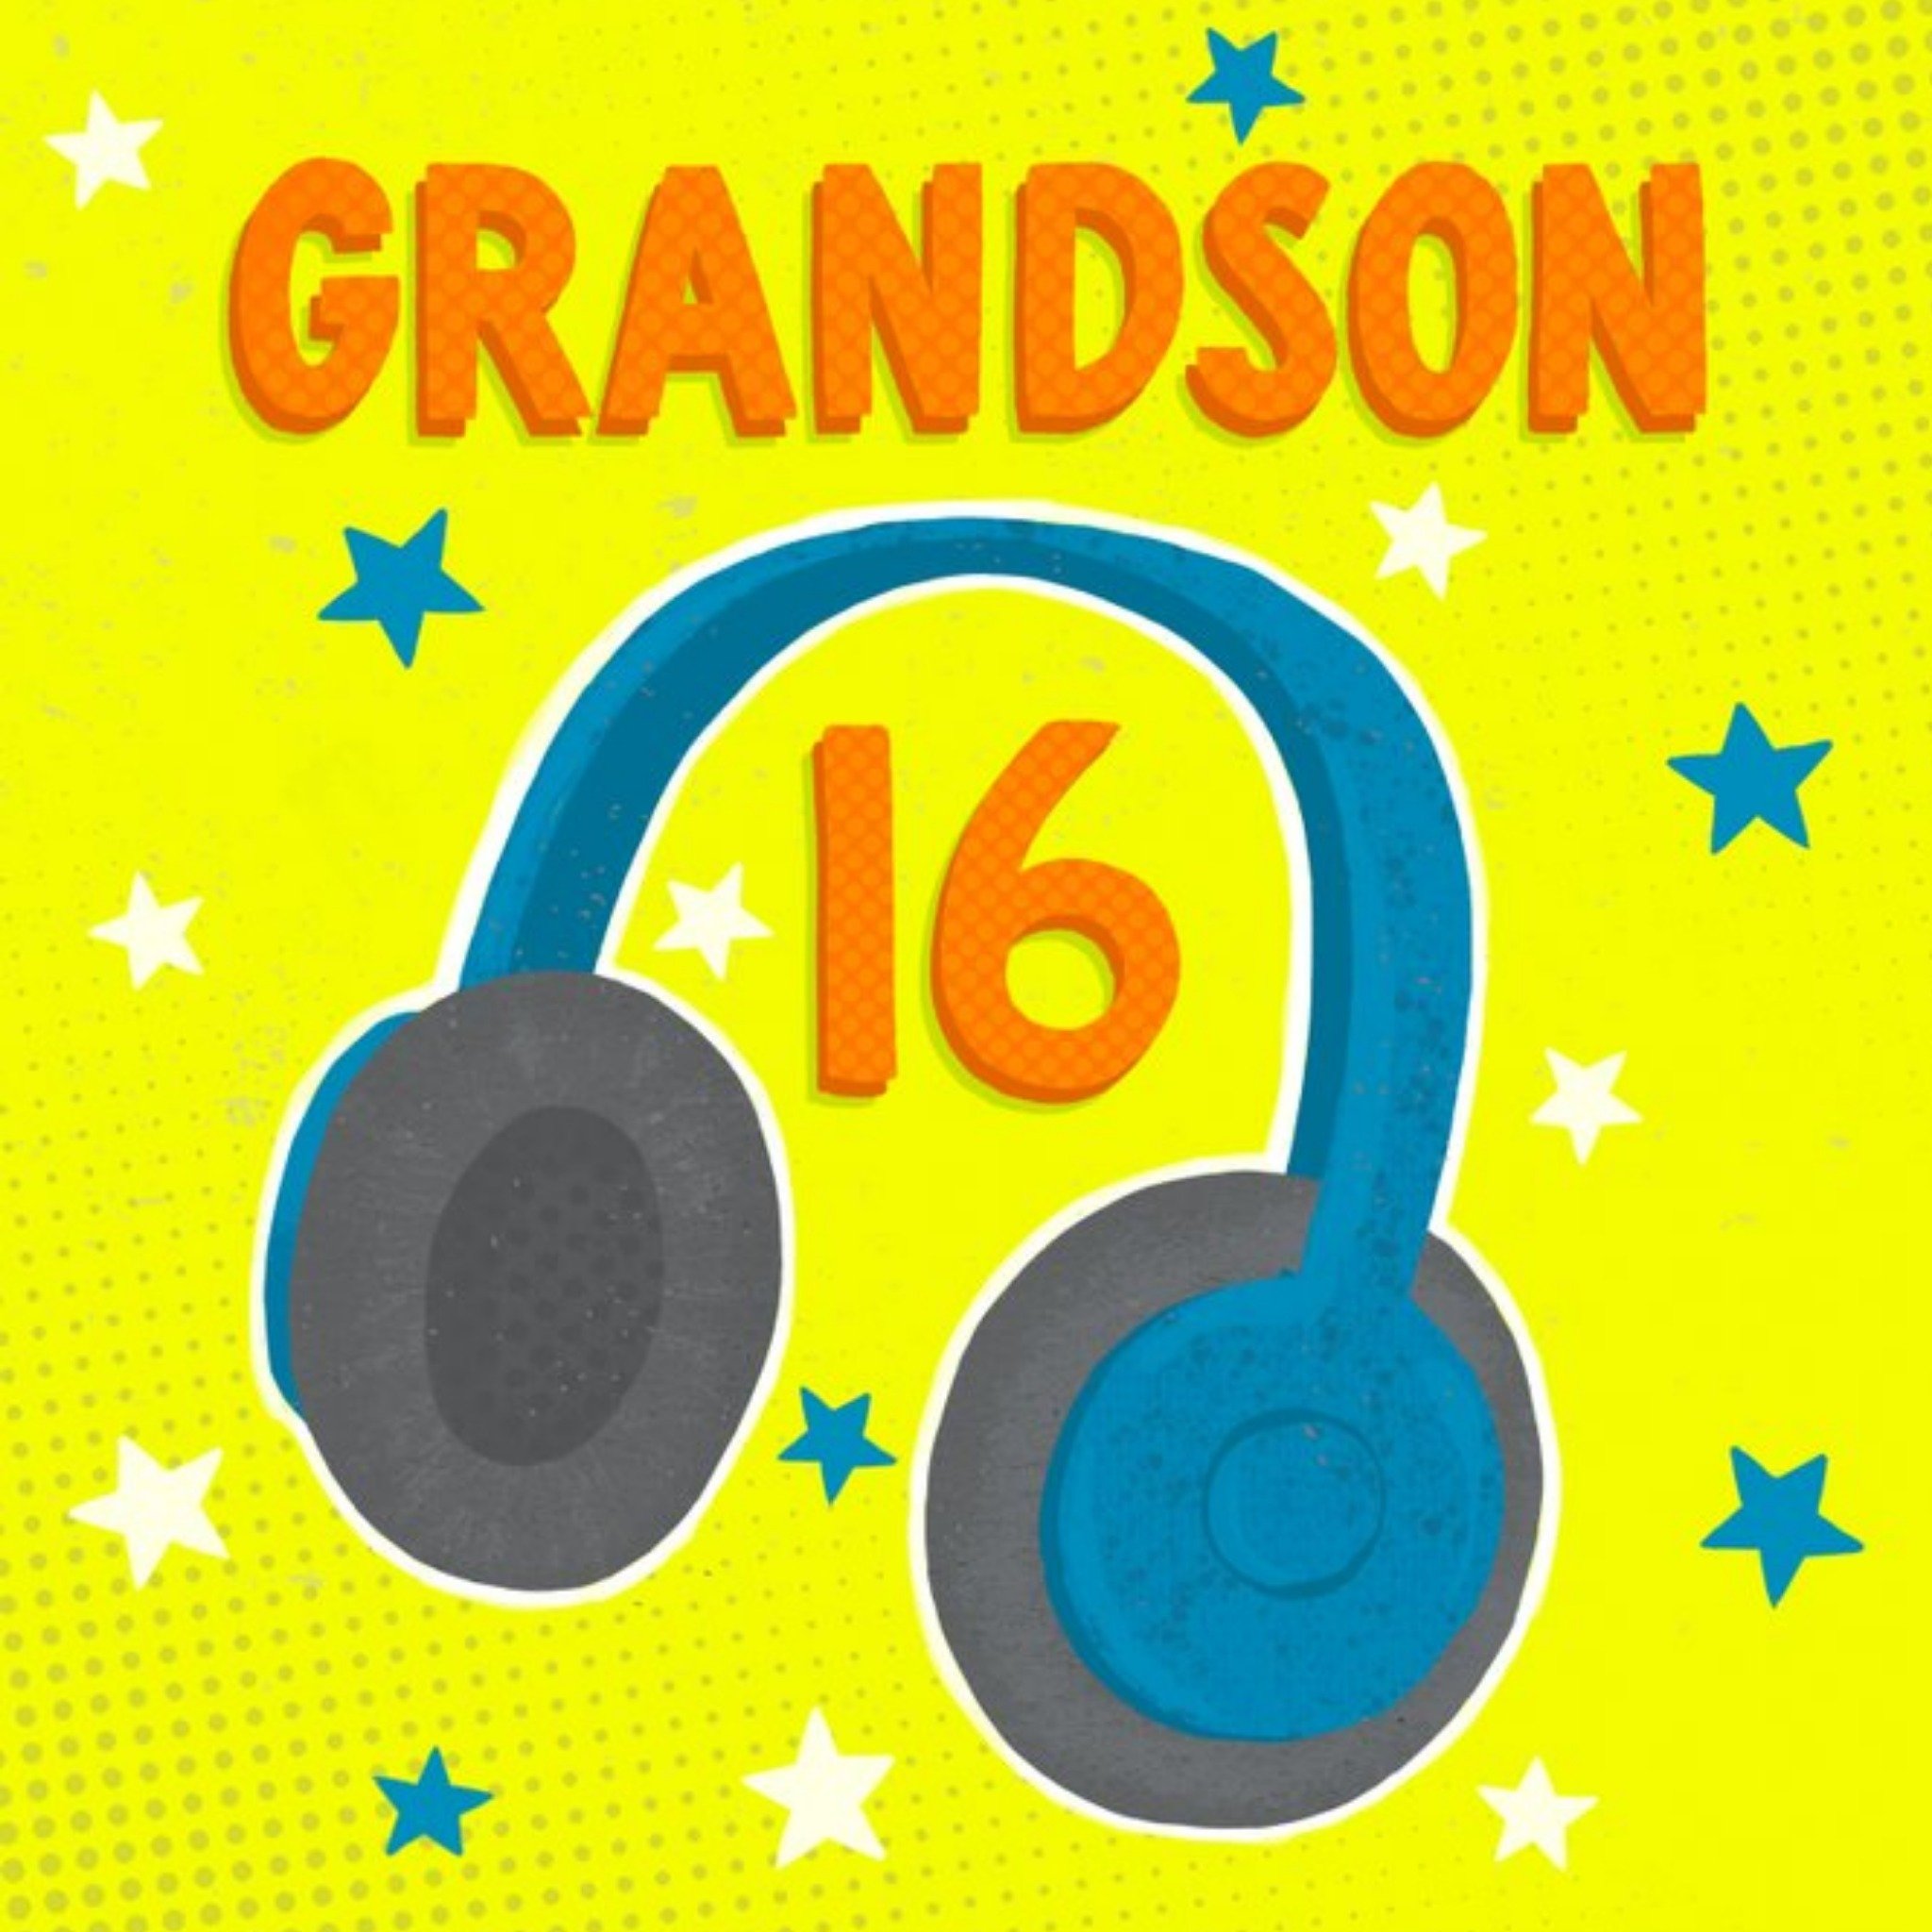 Moonpig Bright Graphic Illustrated Headphones Pop Art 16th Birthday Grandson Card, Large